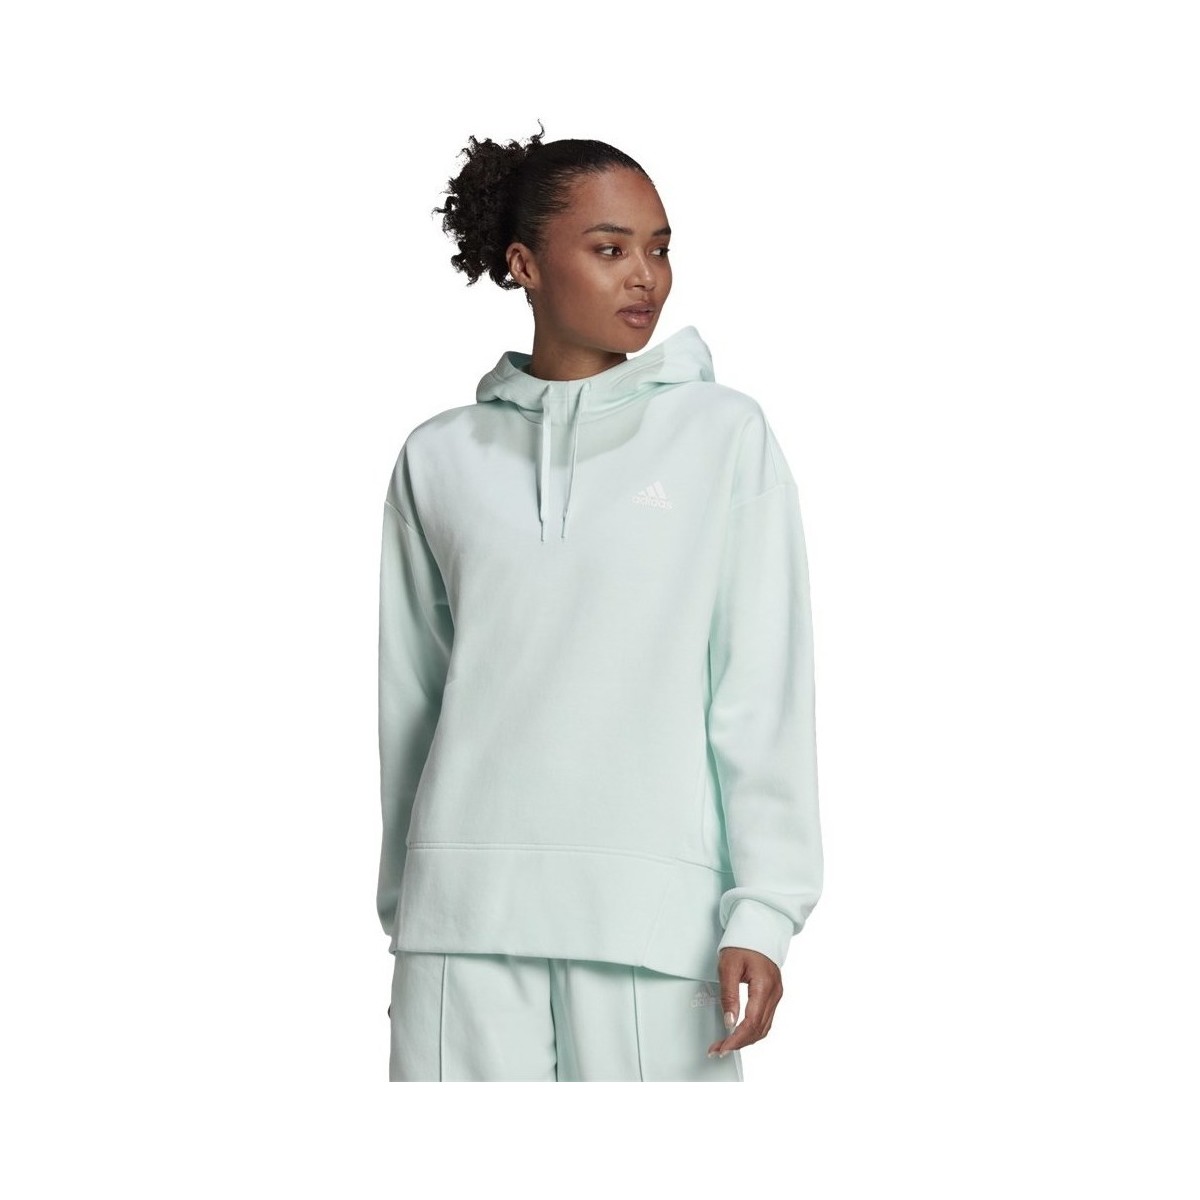 textil Dam Sweatshirts adidas Originals Essentials Studio Fleece Torkos